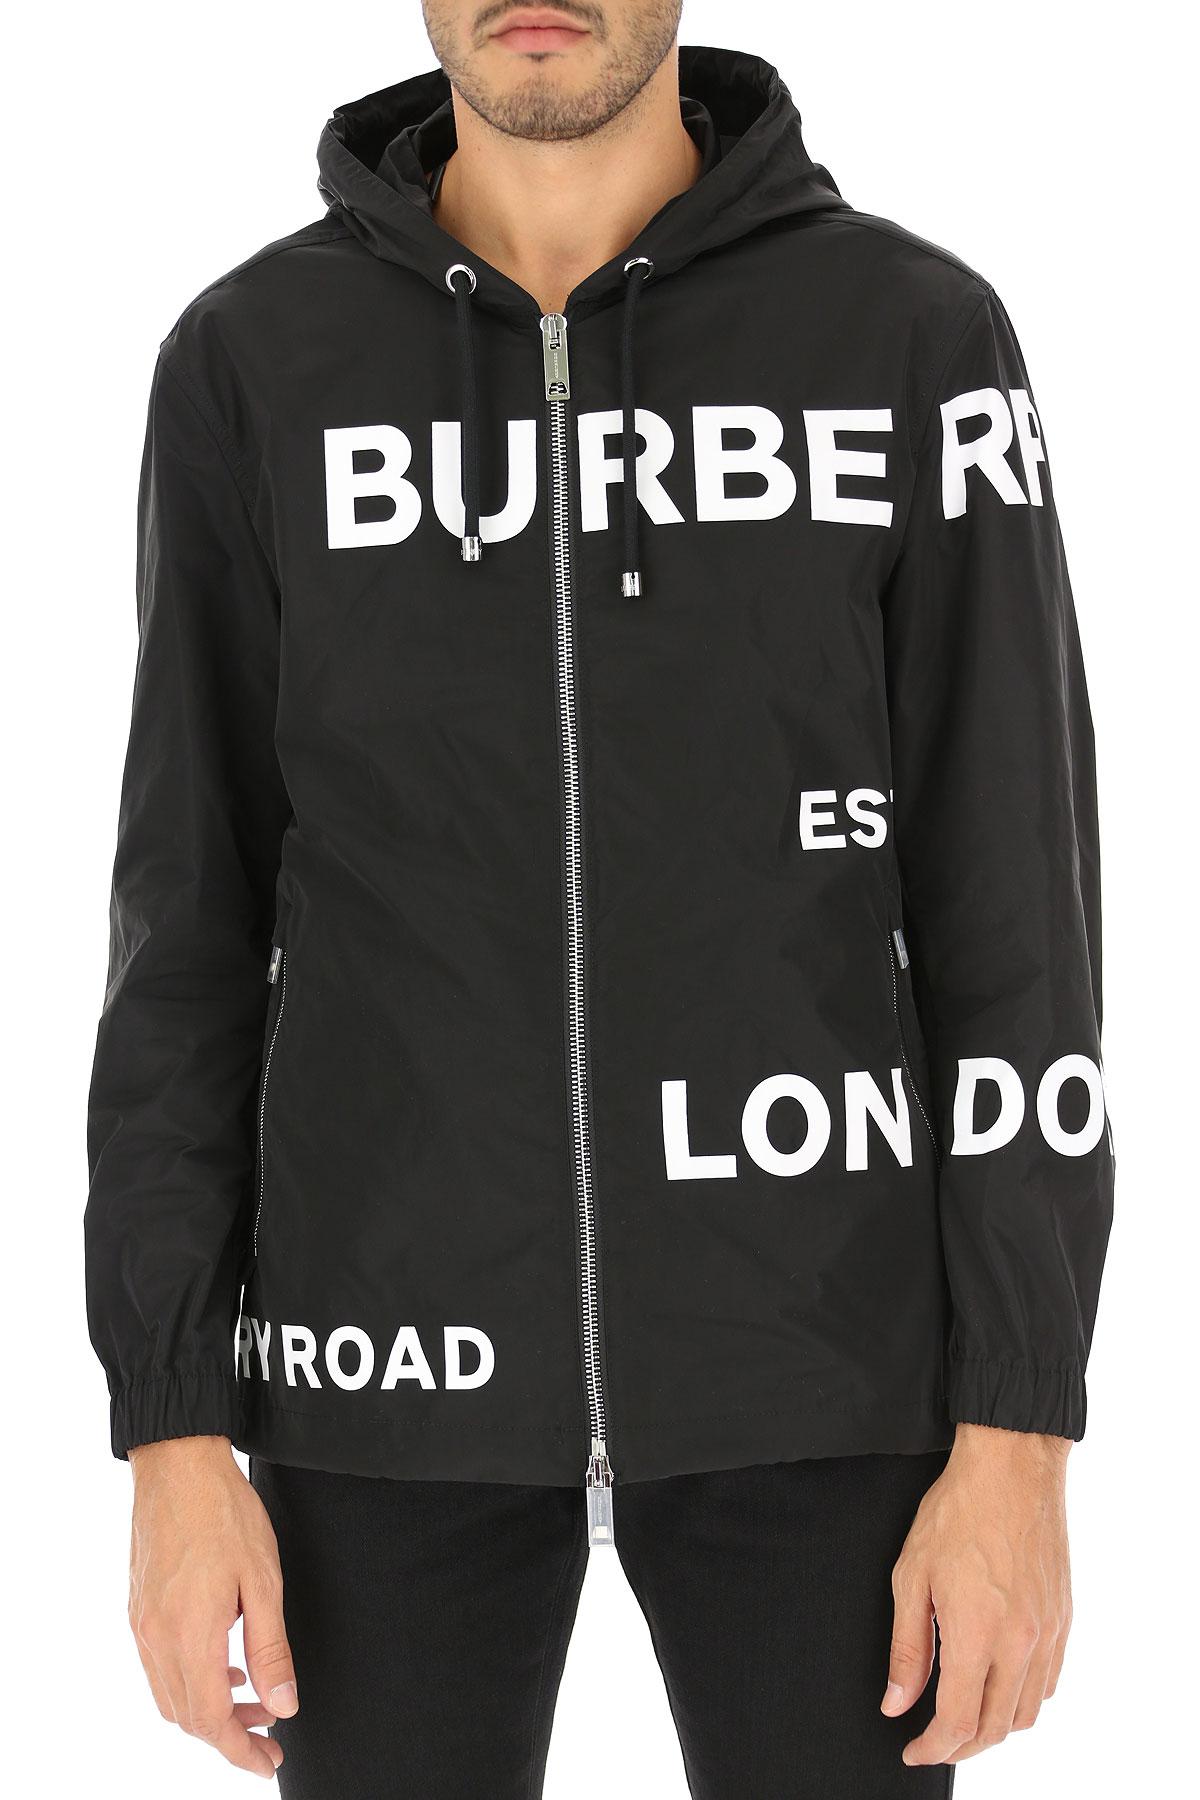 burberry wind jacket